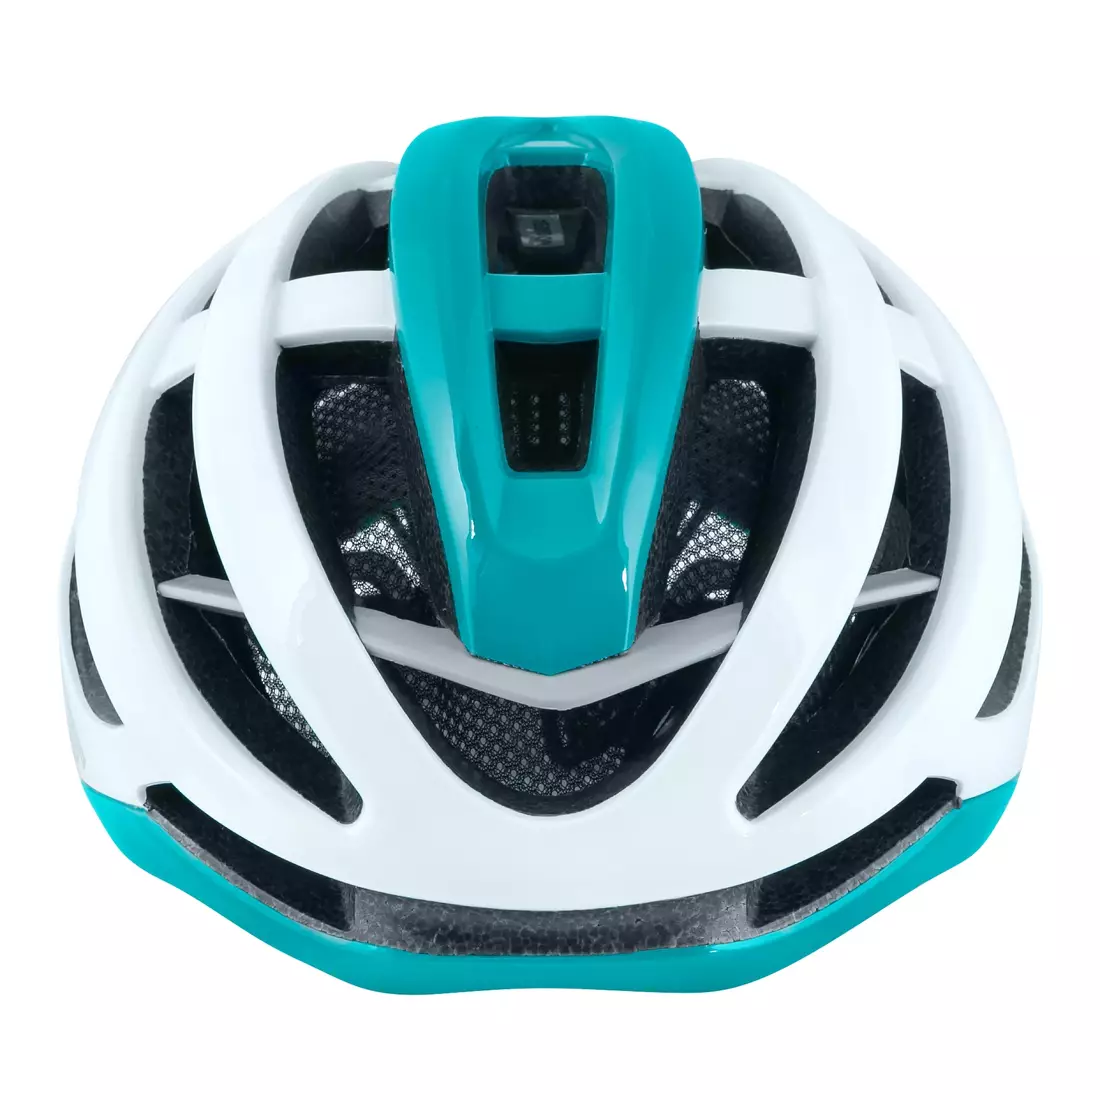 FORCE LYNX Cyklistická helma turquoise